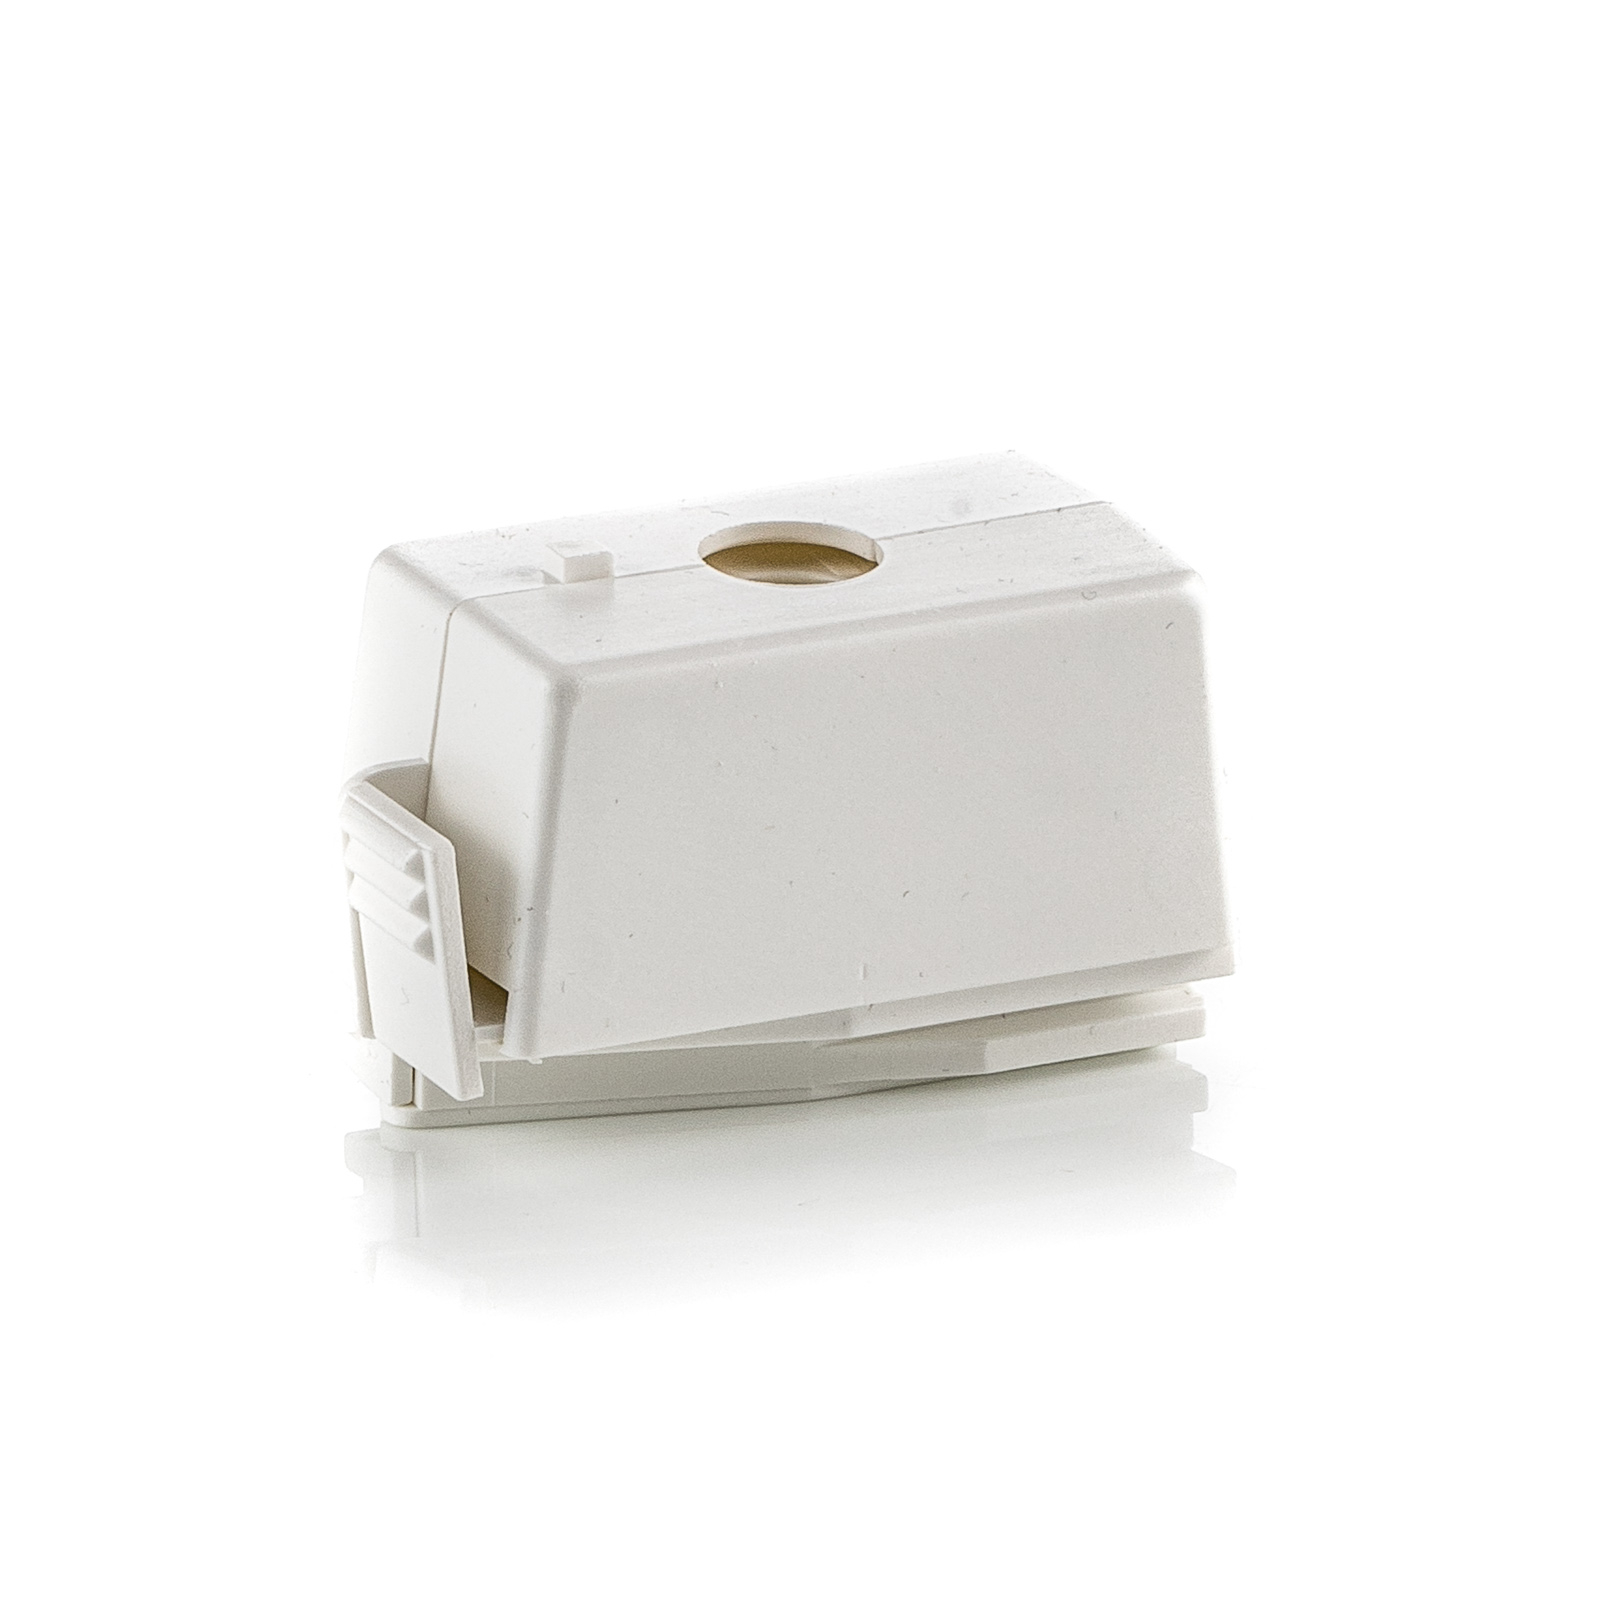 Noa 3-circuit blind adapter, capacity 10 kg, white